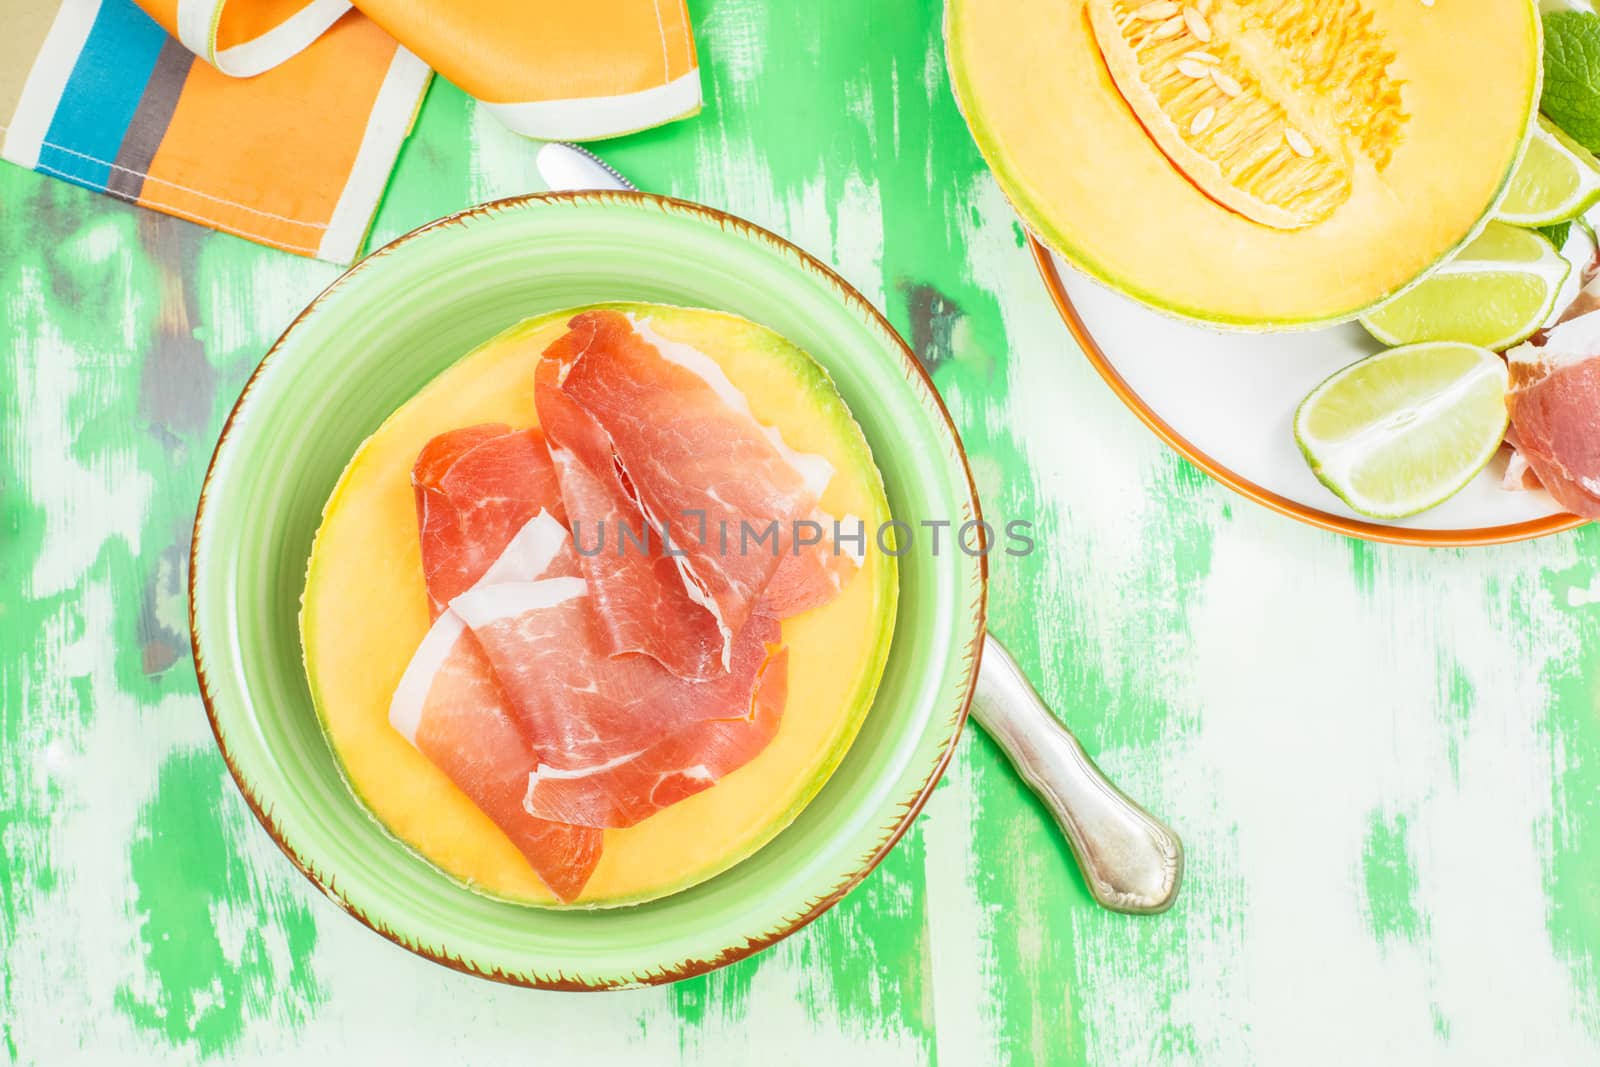 Fresh Melon with Prosciutto by Slast20